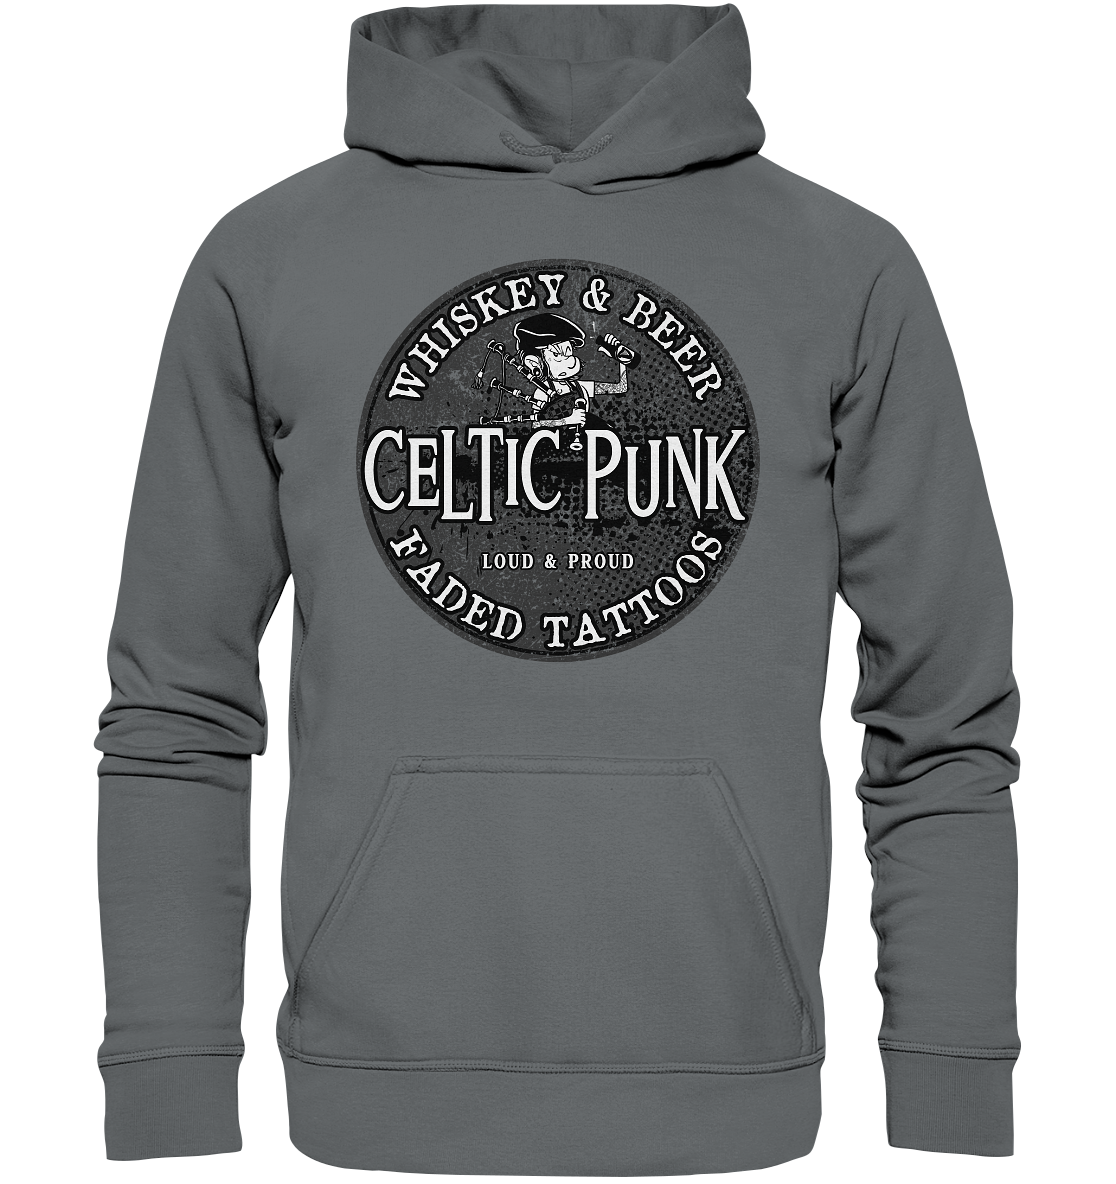 Celtic Punk "Whiskey, Beer & Faded Tattoos" - Basic Unisex Hoodie